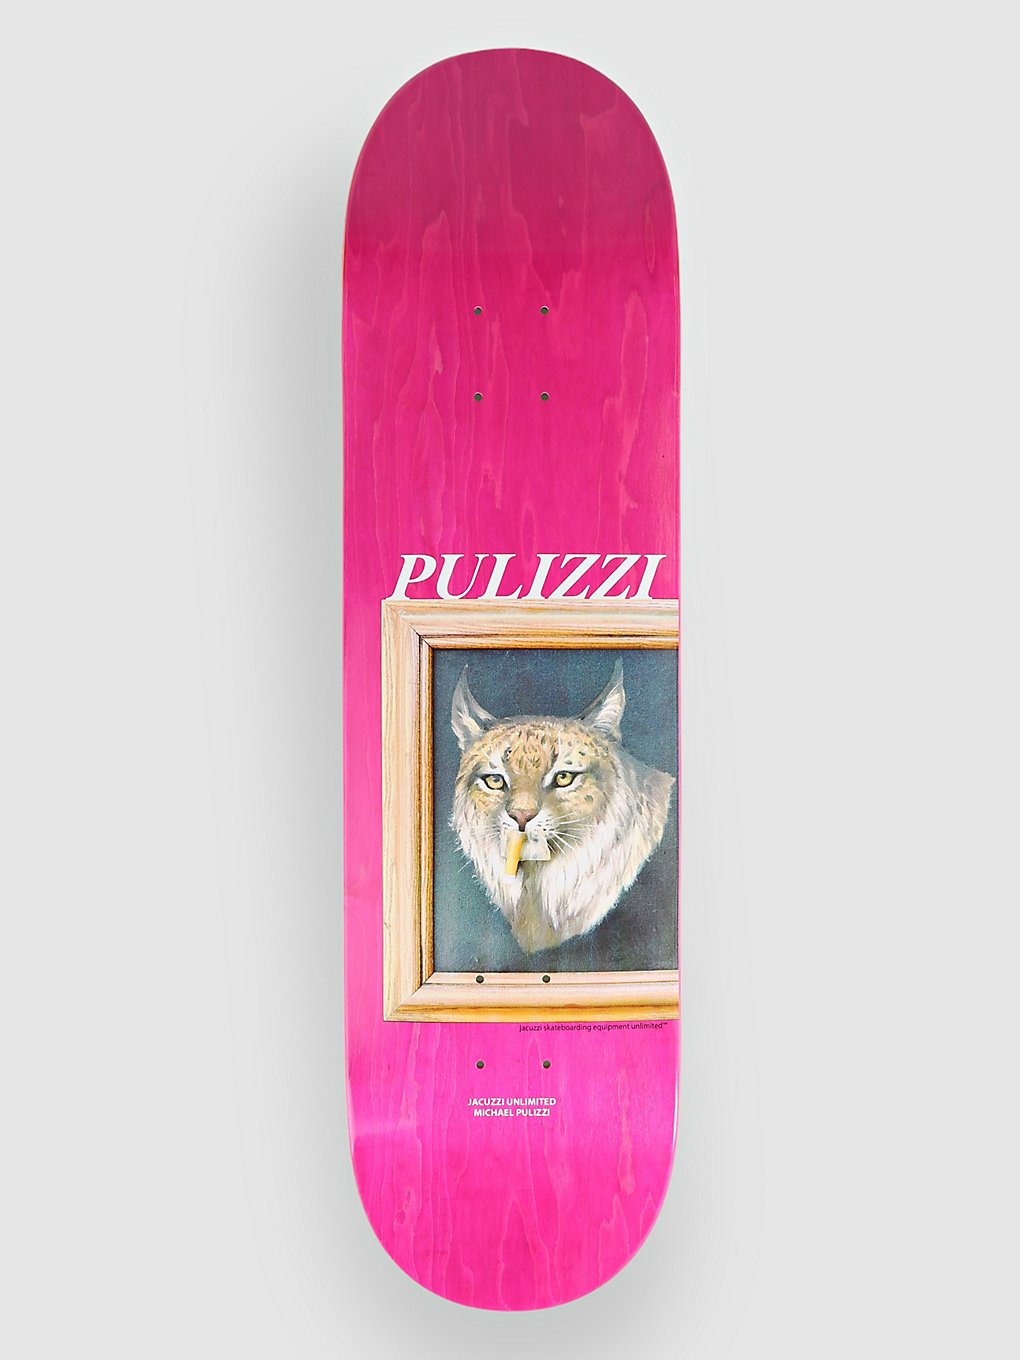 jacuzzi unlimited michael pulizzi bobcat 8.375 skateboard deck pink